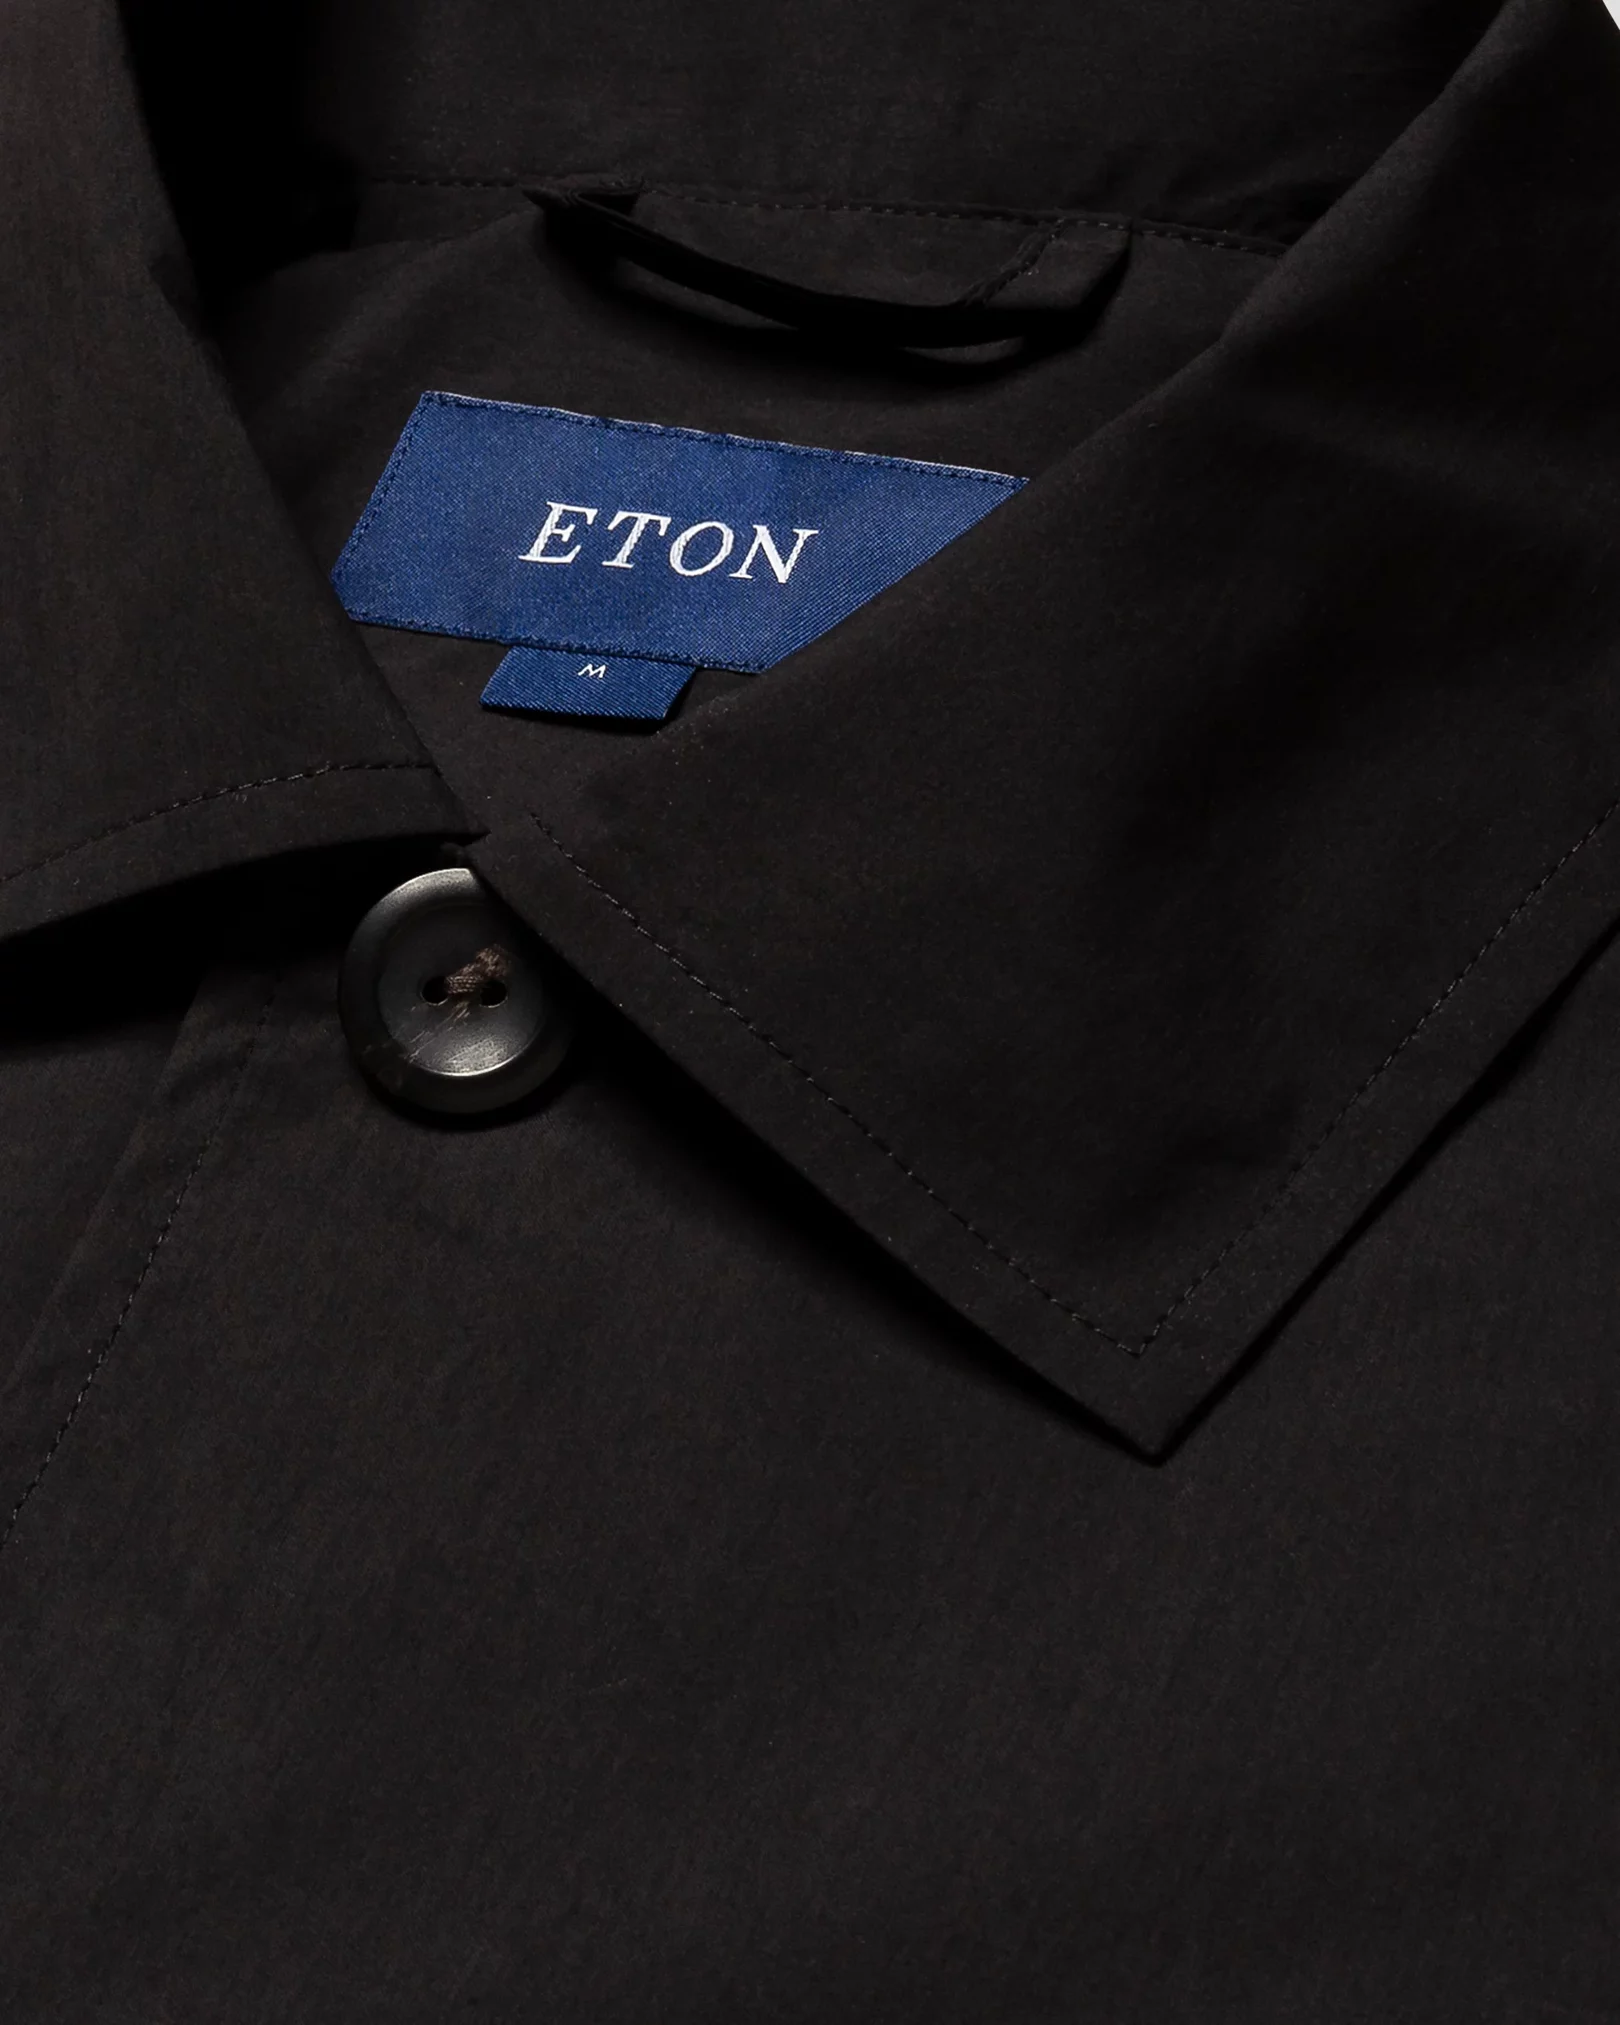 Eton - black cotton and nylon overshirt